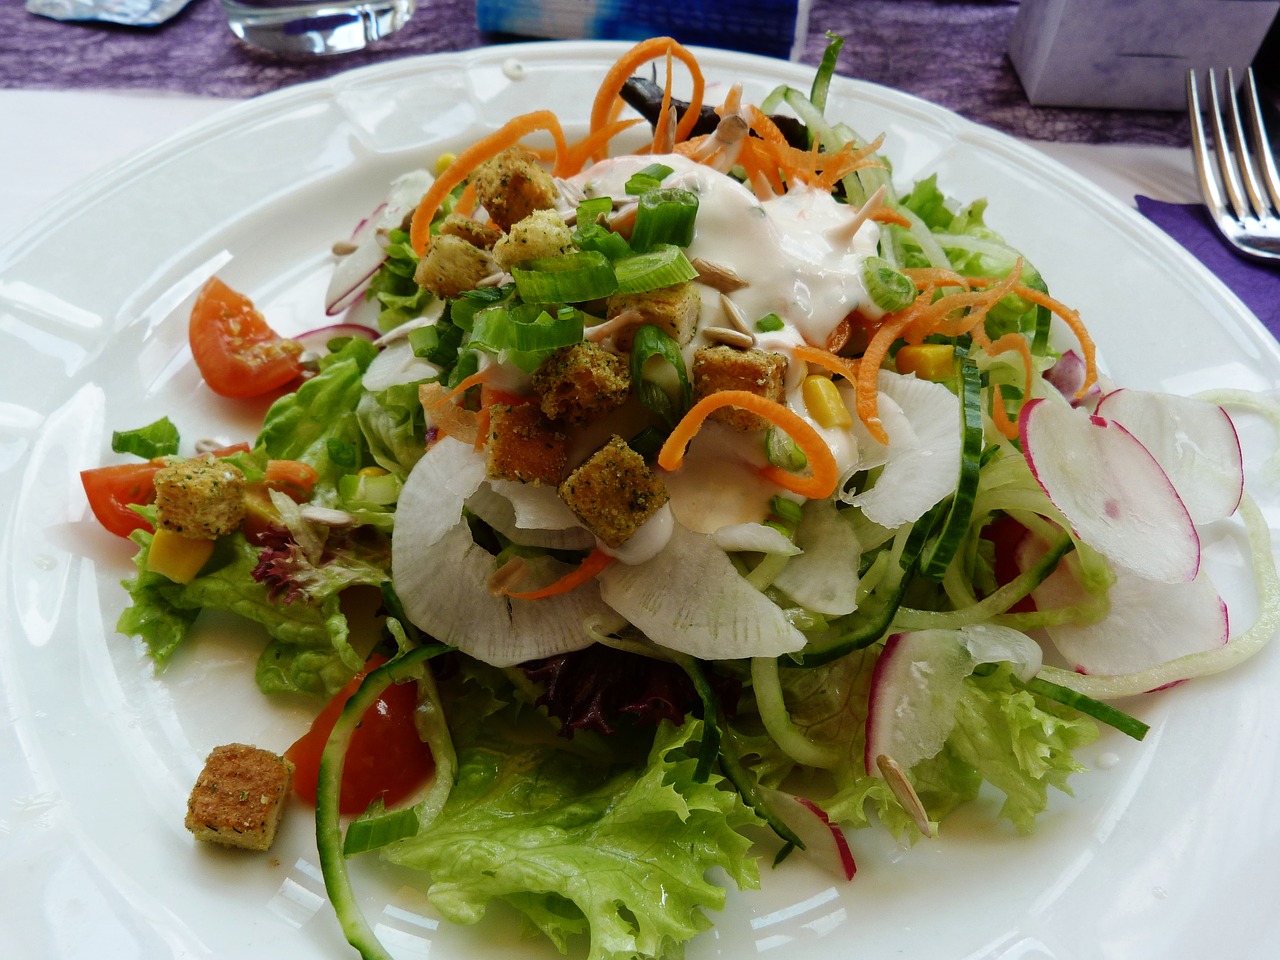 Napa Salad